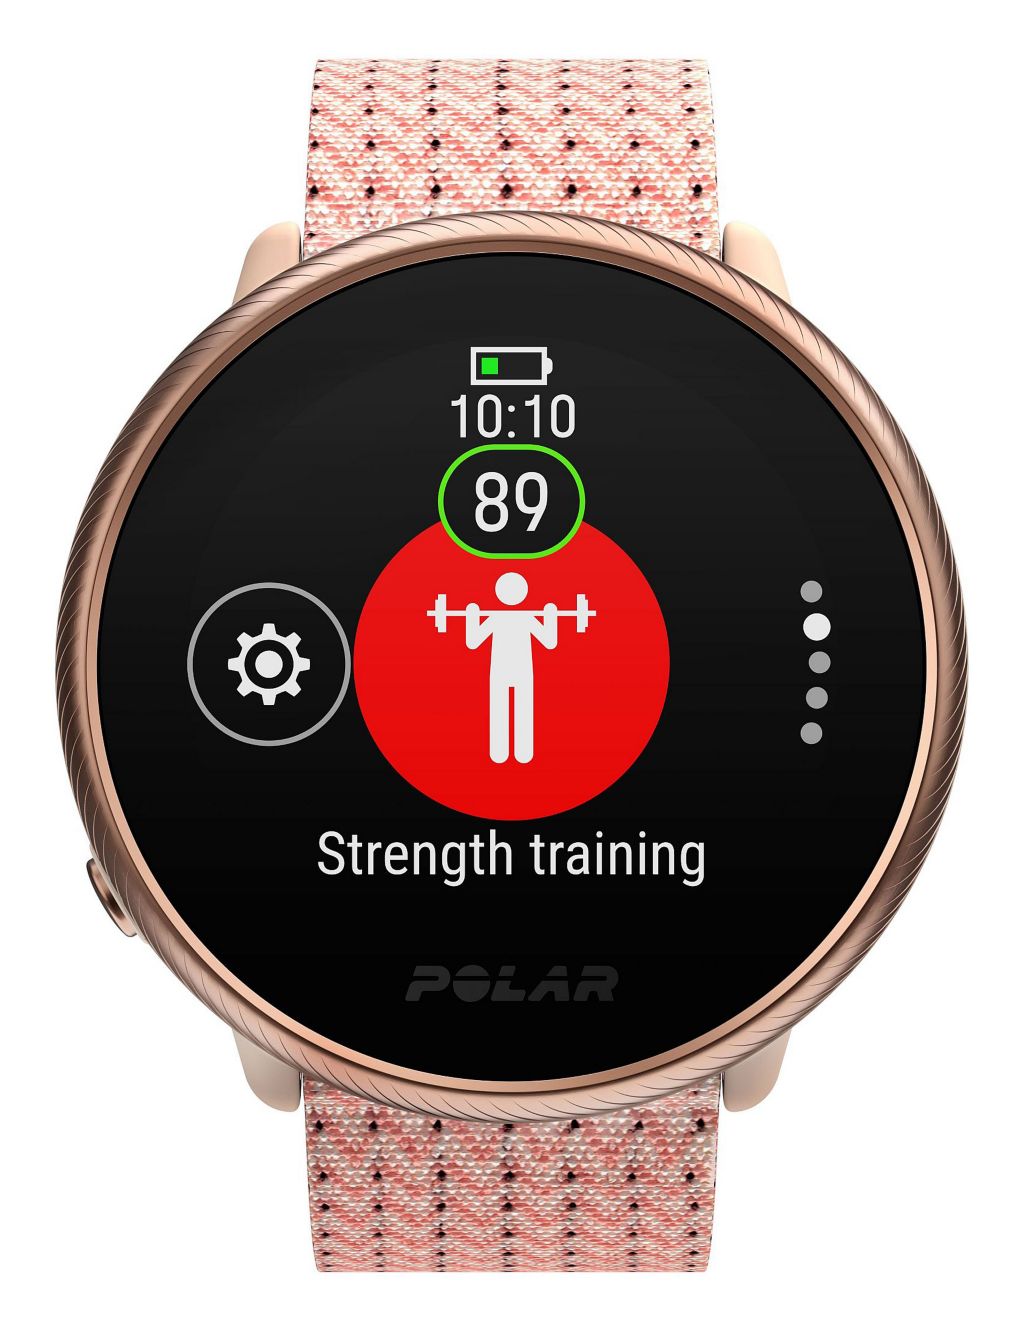 Polar Lignite 2 Fitness Smartwatch image 4